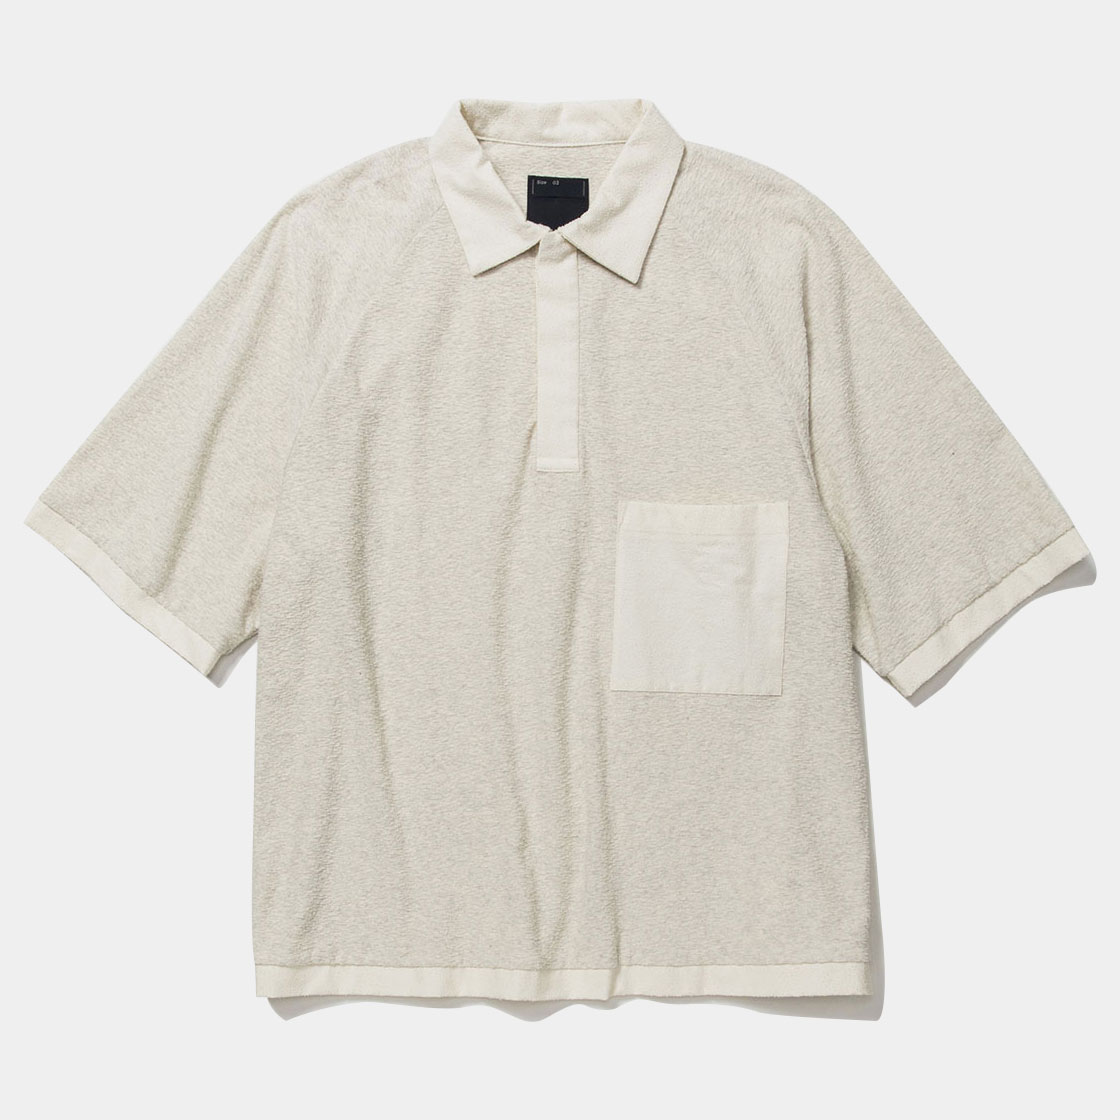 Imitation Suede Polo Shirt / Off White